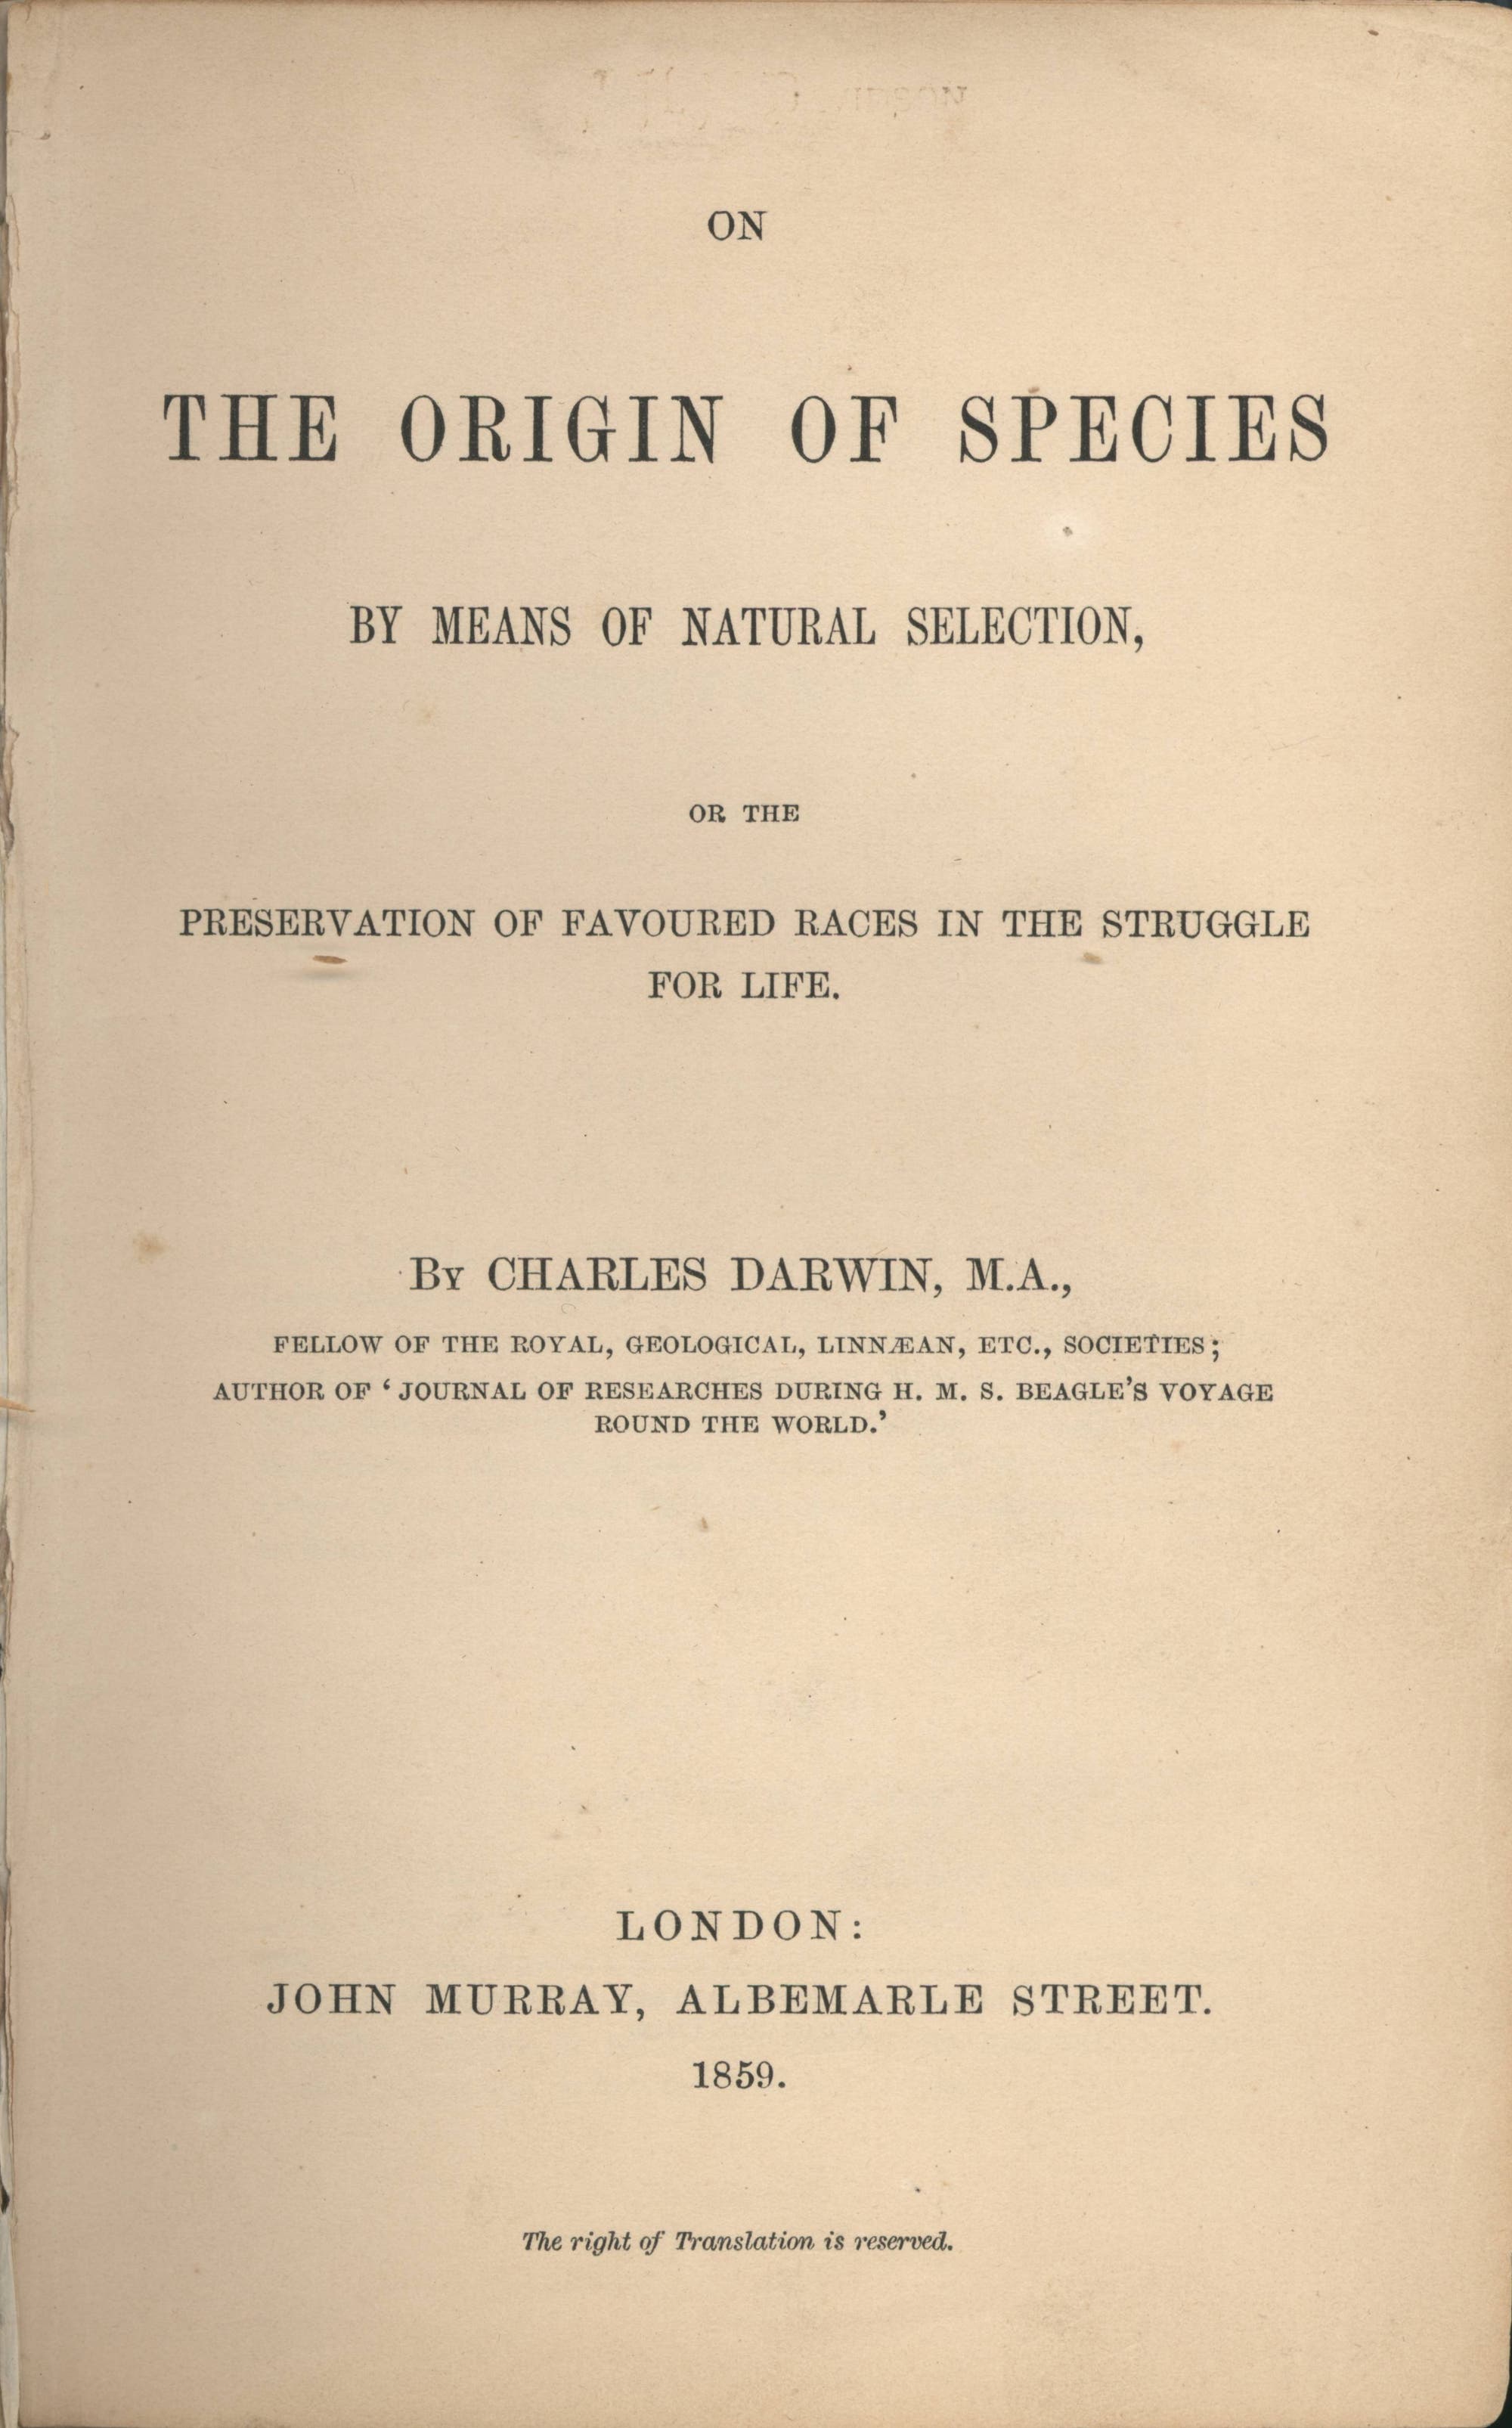 Titelblatt von "On the Origin of Species"